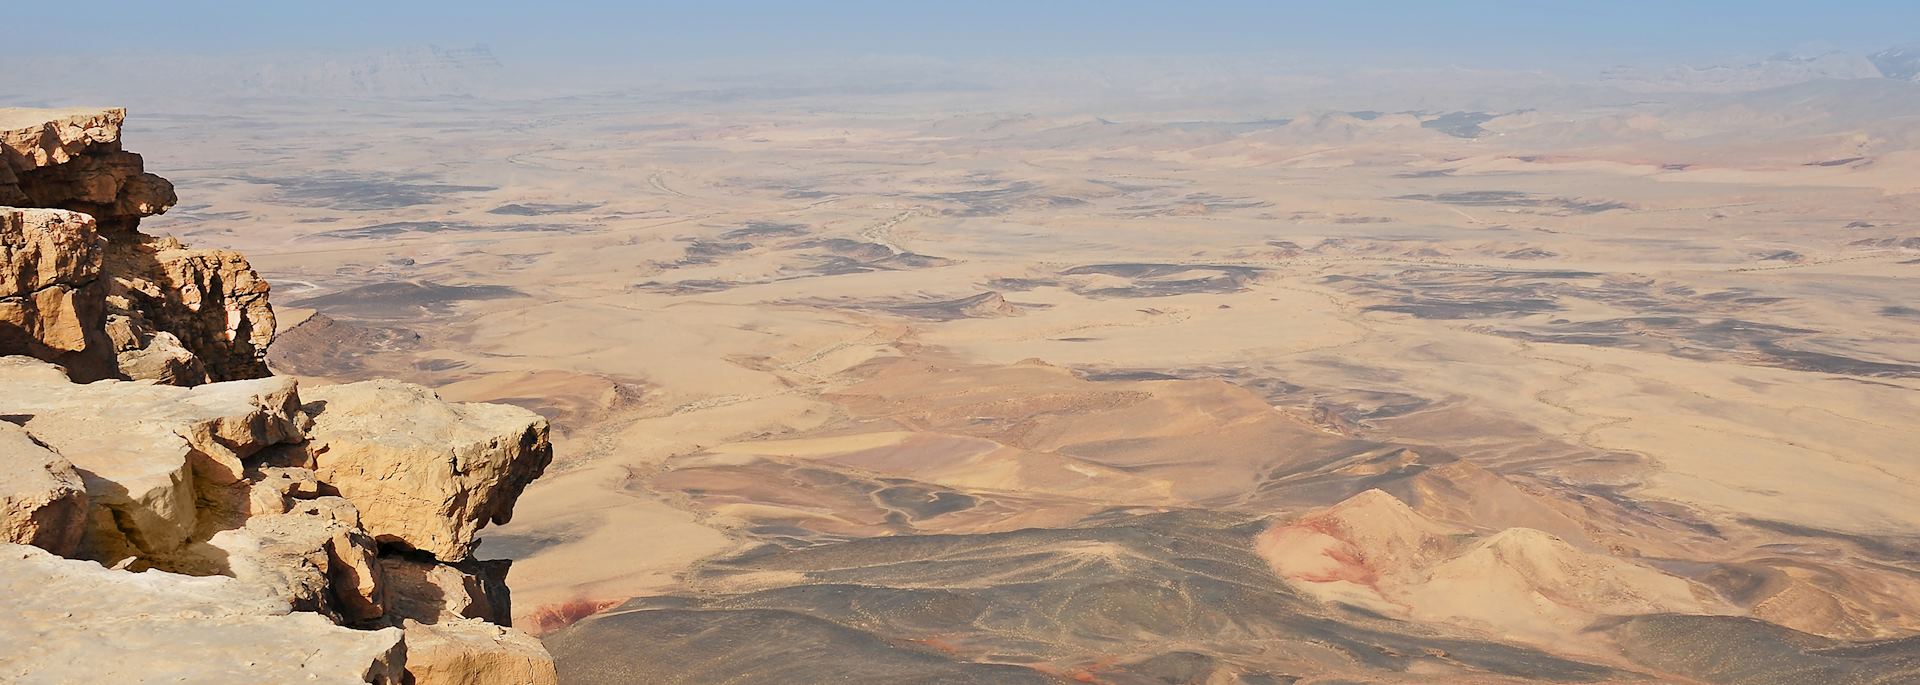 Ramon Crater, Negev Desert